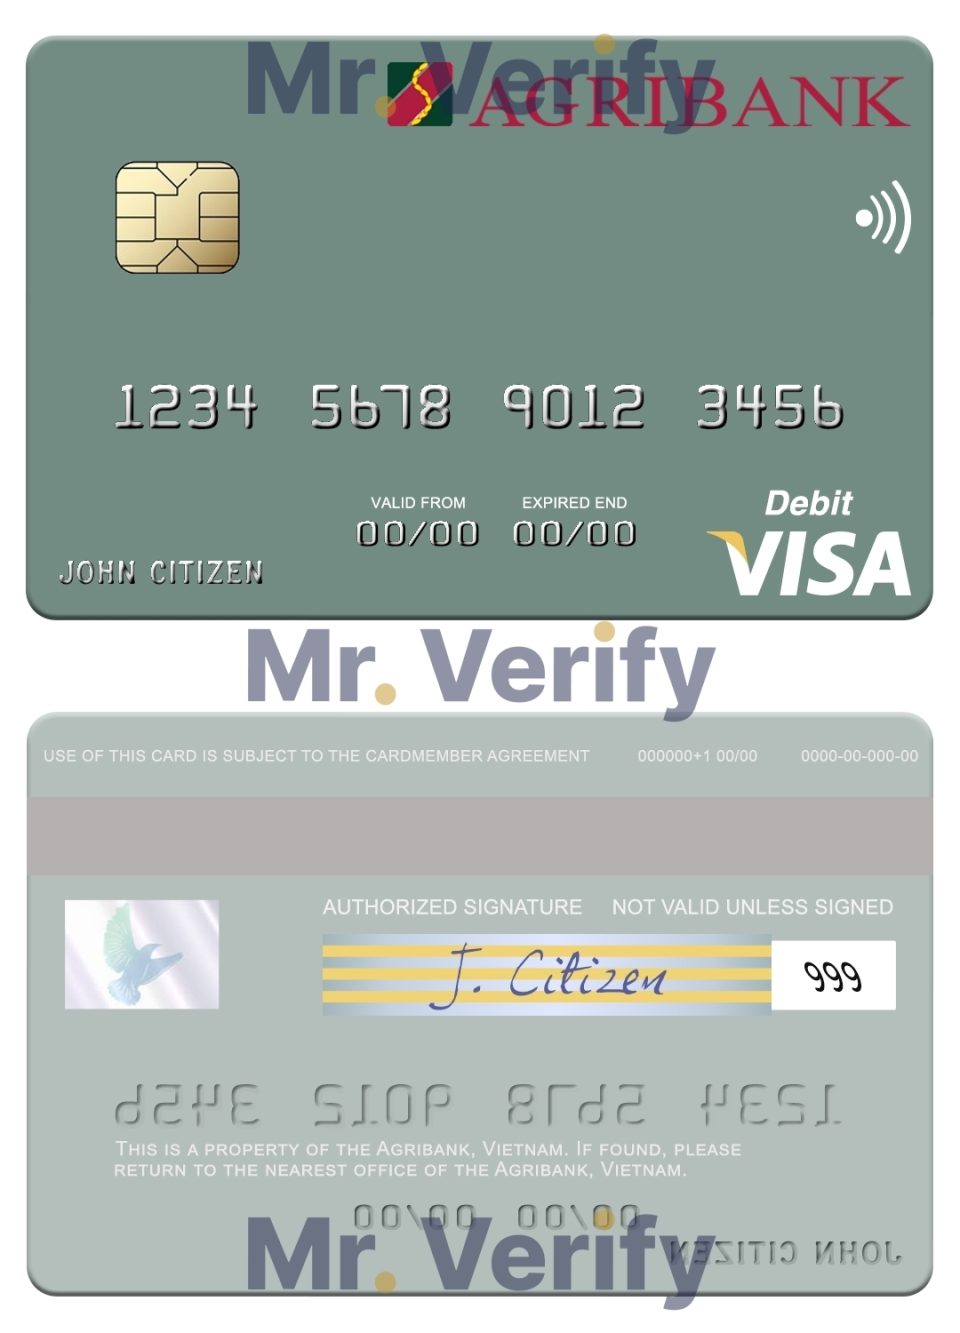 Editable Vietnam Agribank visa debit card Templates in PSD Format